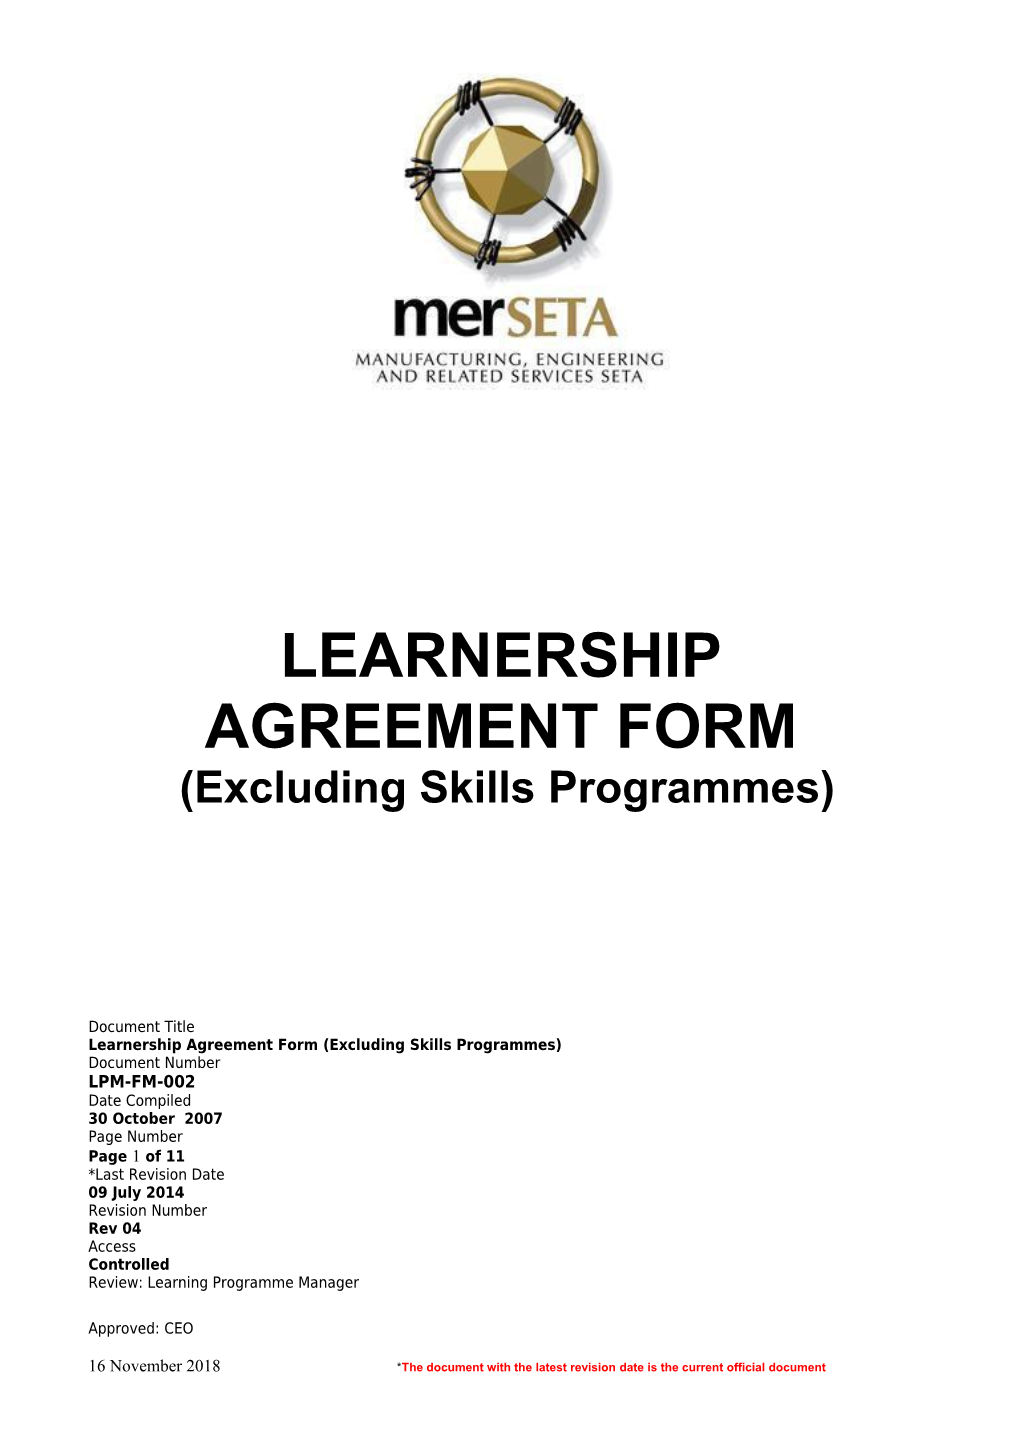 Learnership Agreement Form